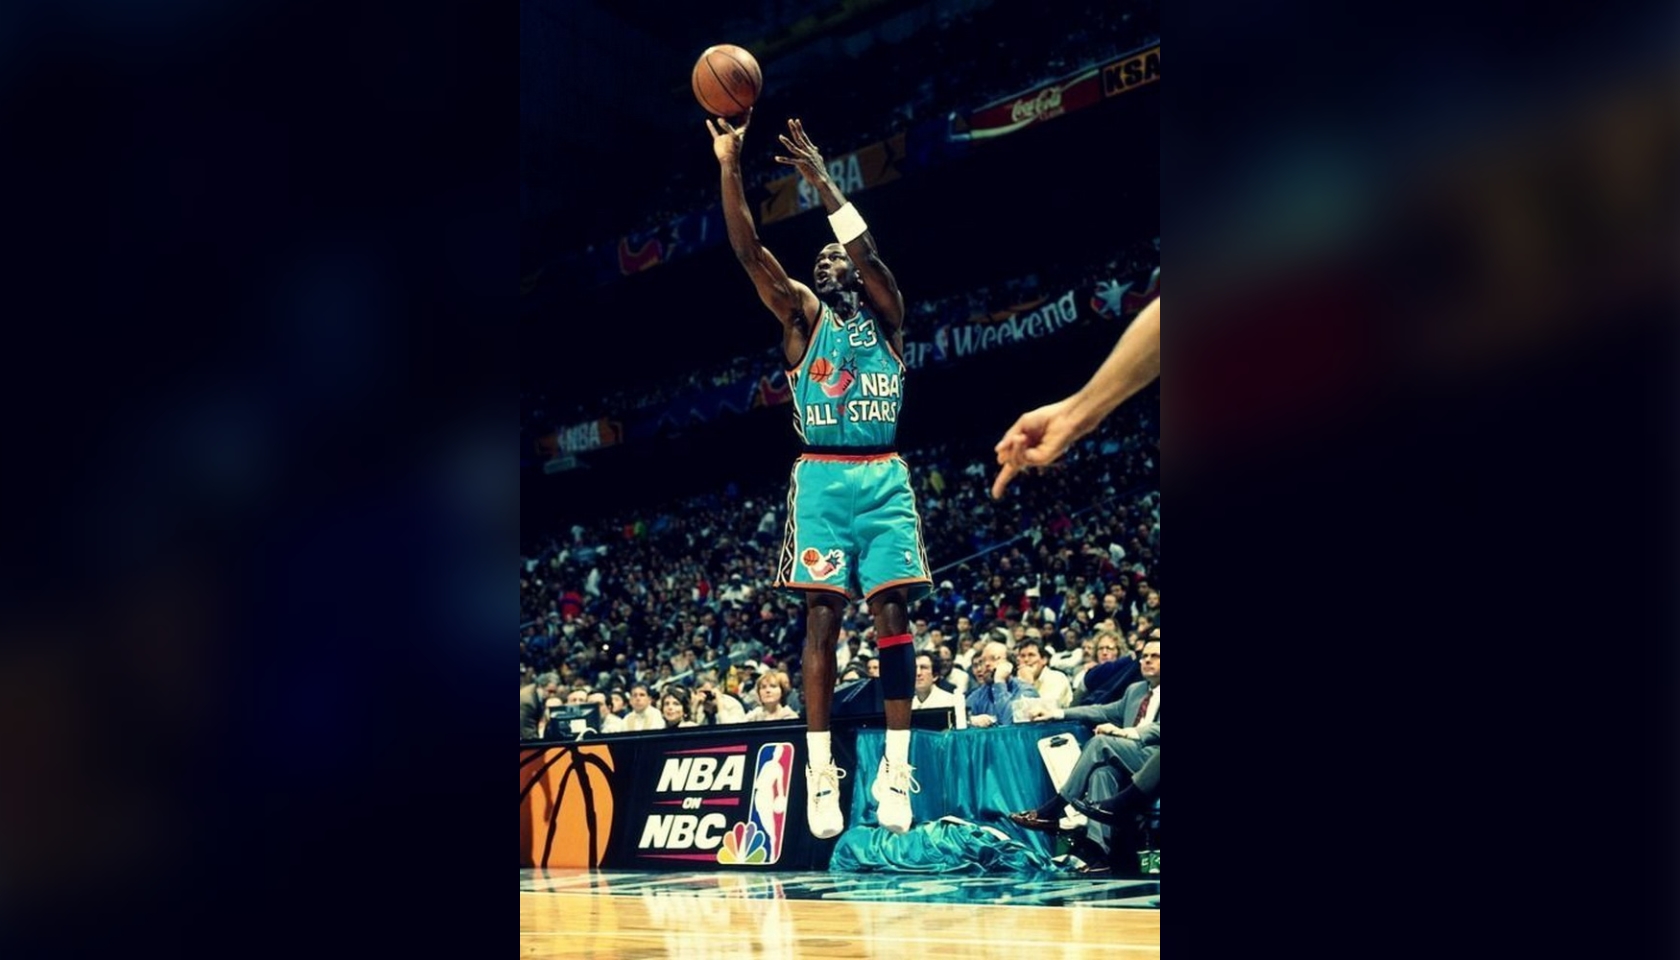 1996 Michael Jordan Signed NBA All Star Jersey. Basketball